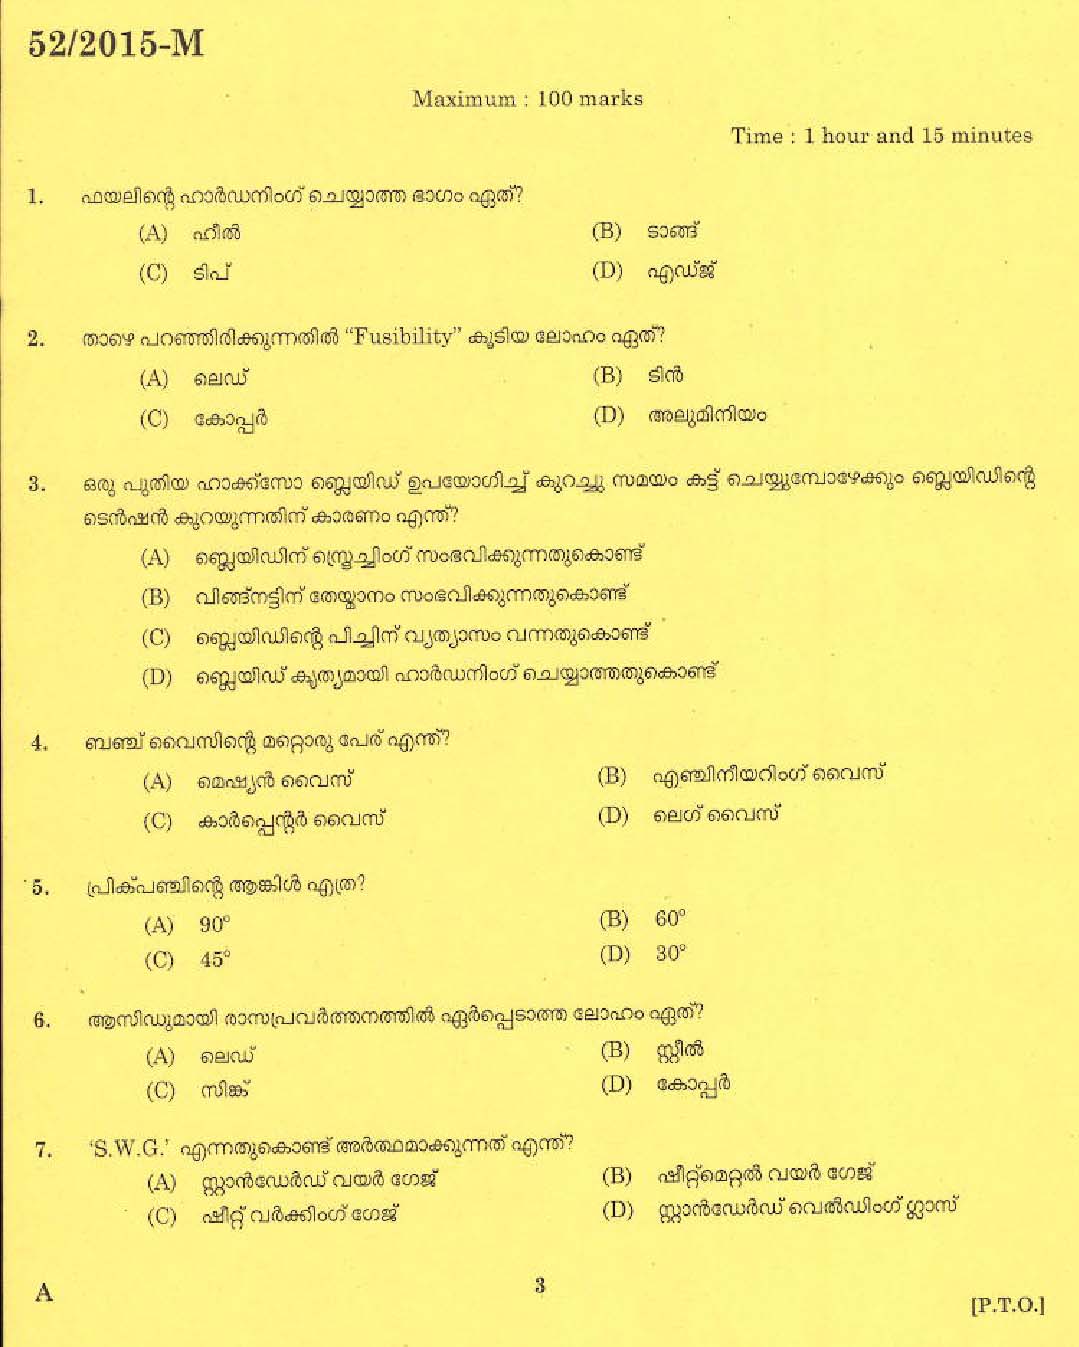 KPSC Tradesman Sheet Metal Exam 2015 Code 522015 M 1